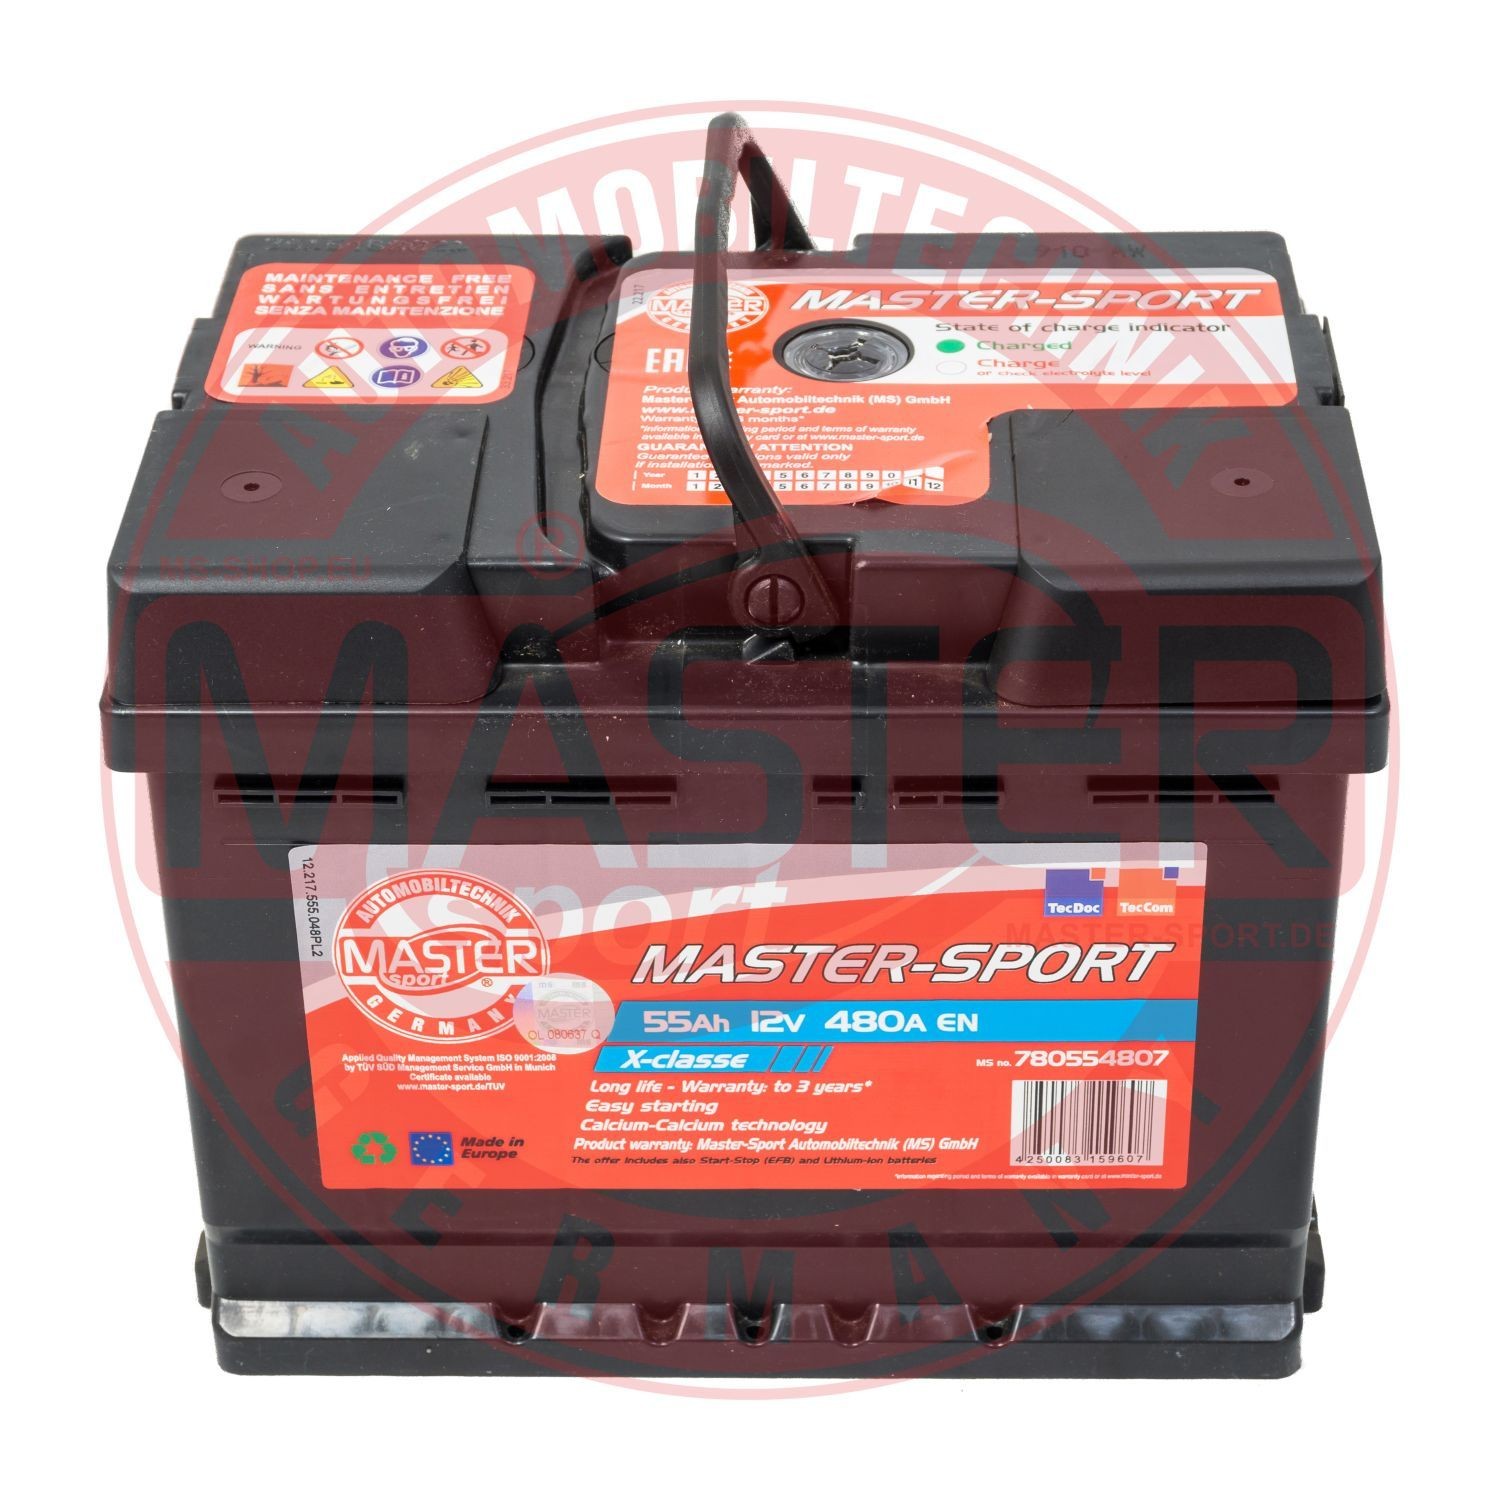 Original 750554802 MASTER-SPORT Stop start battery JEEP